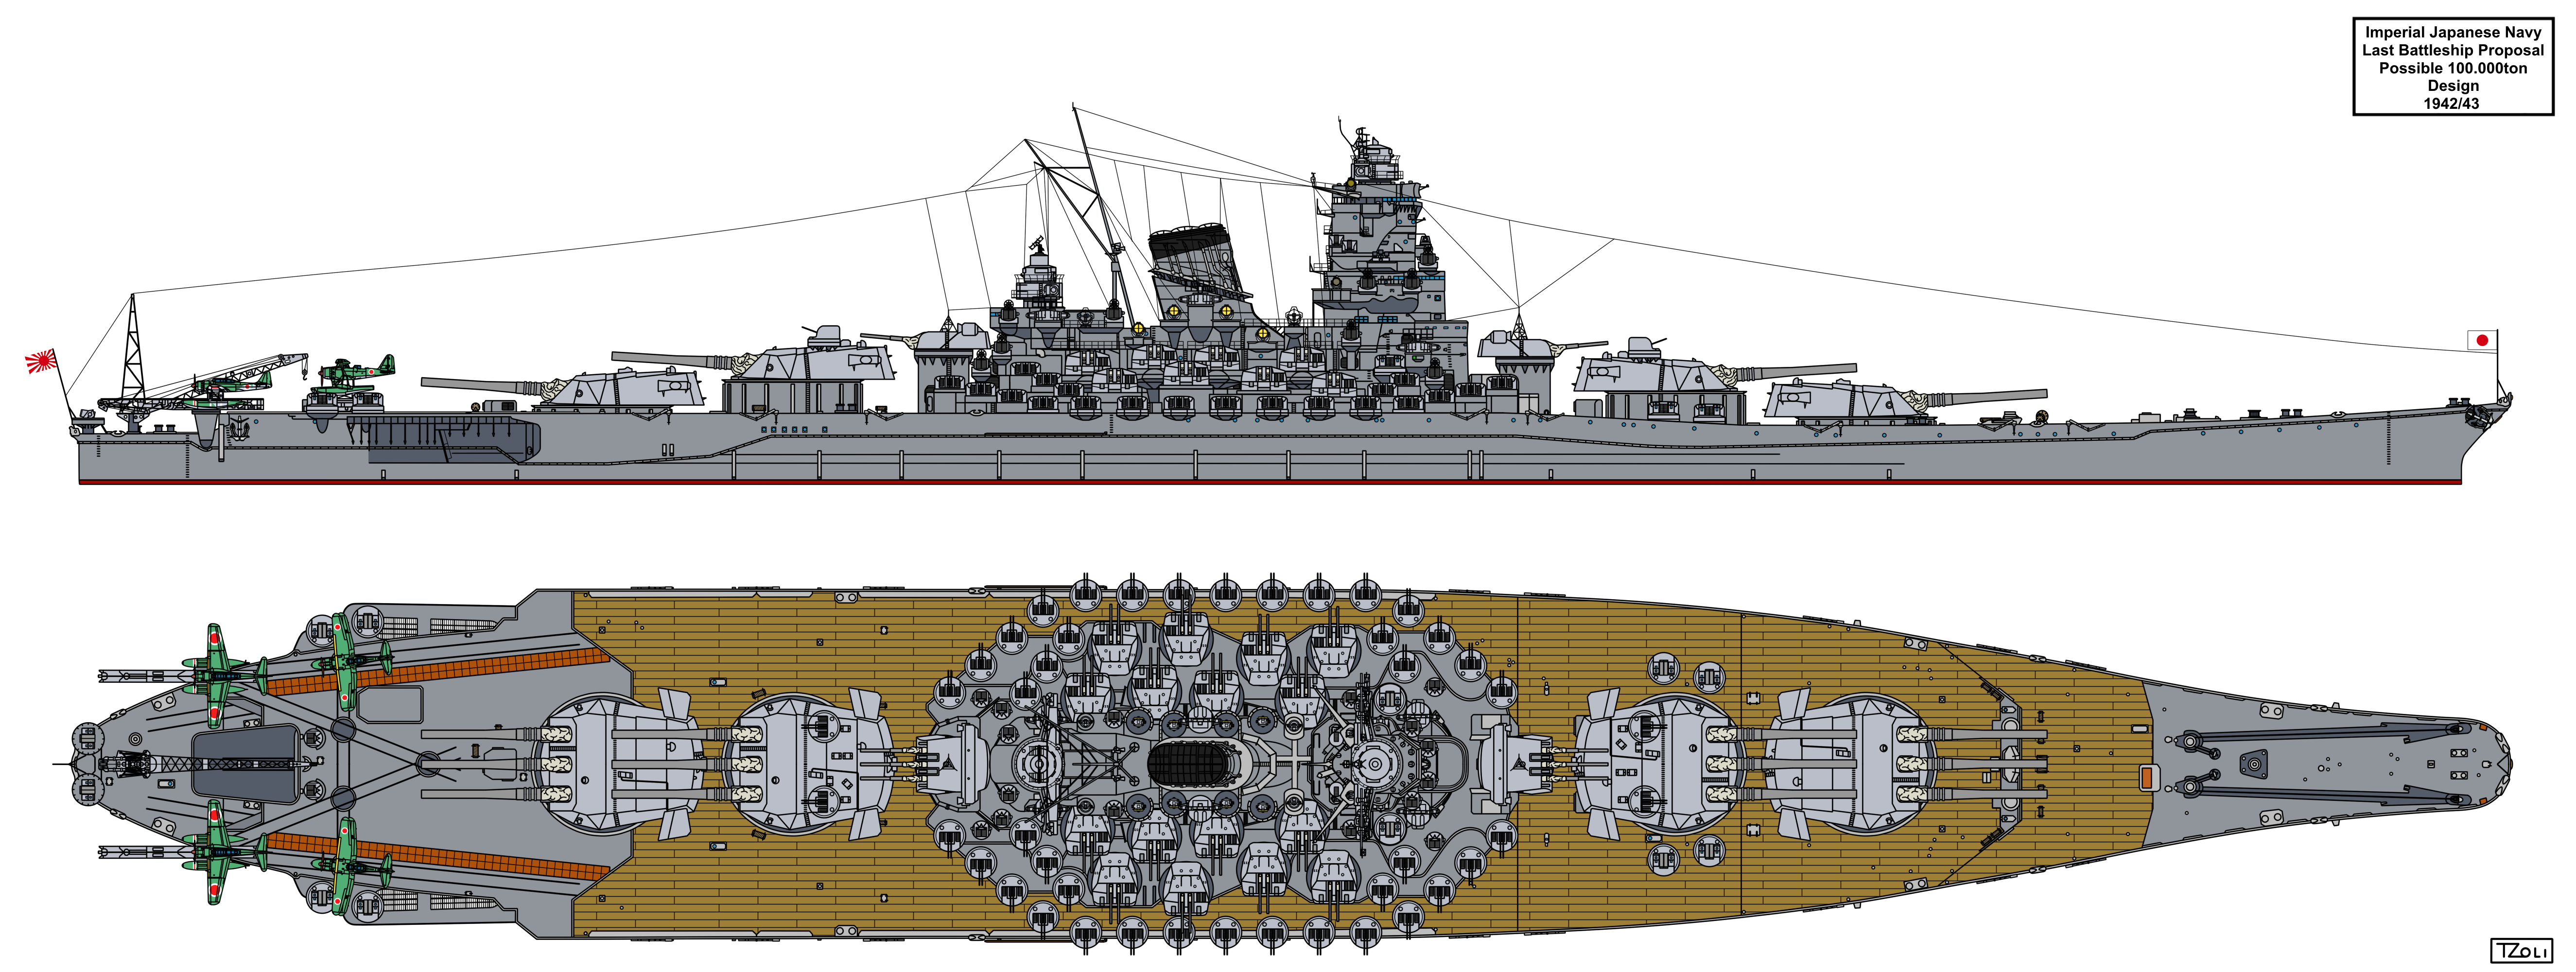 last_japanese_battleship_proposal_by_tzoli-dckbu5r.png